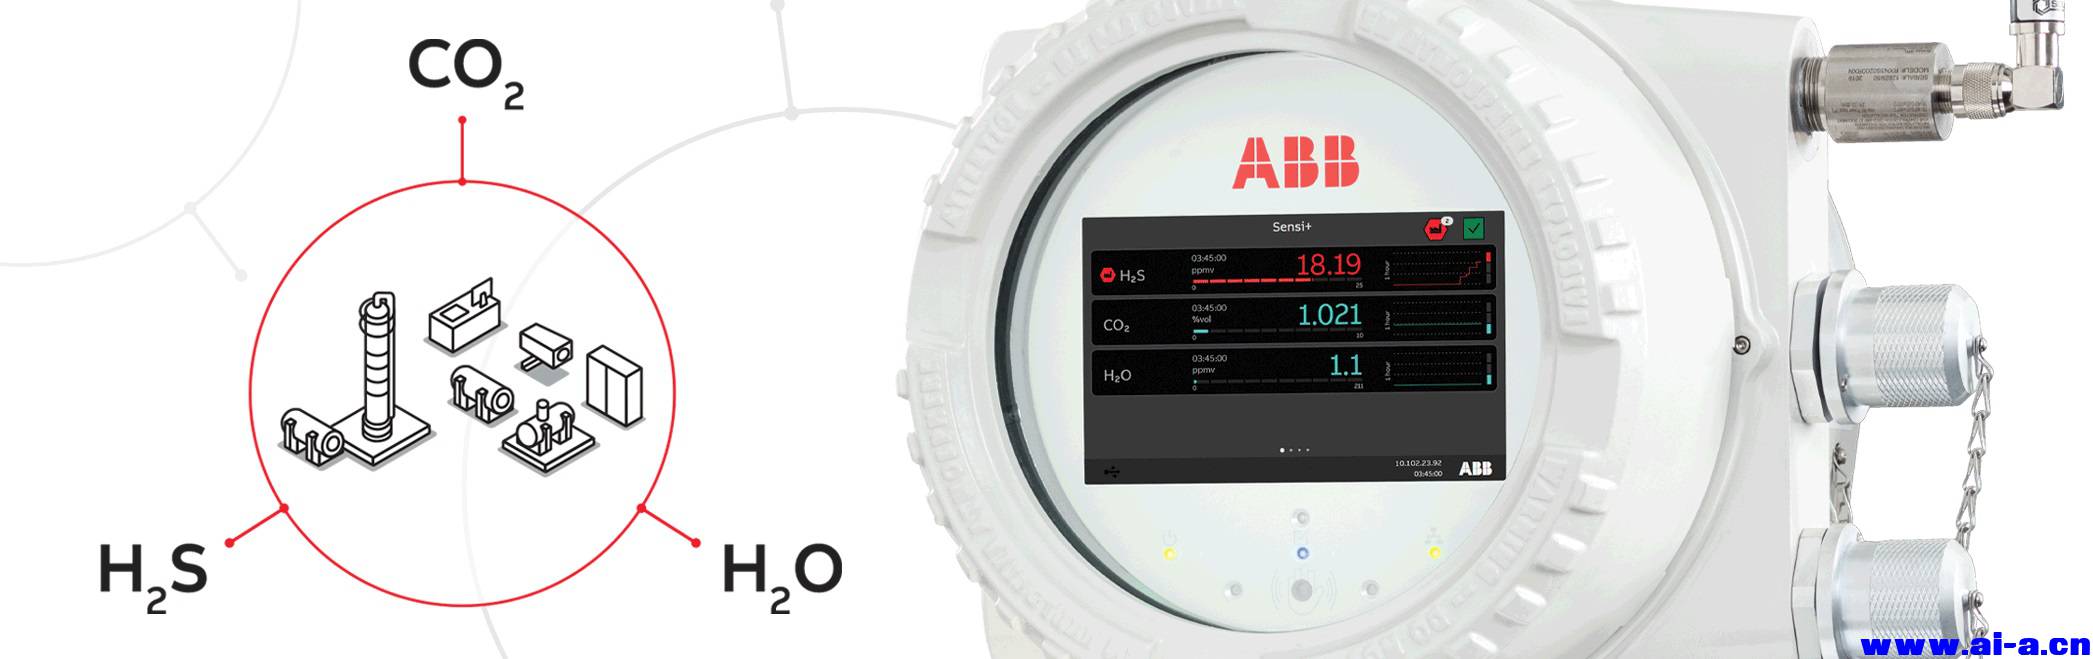 ABB_single_analyzer_for_multiple_gas_contaminants_monitoring.jpg